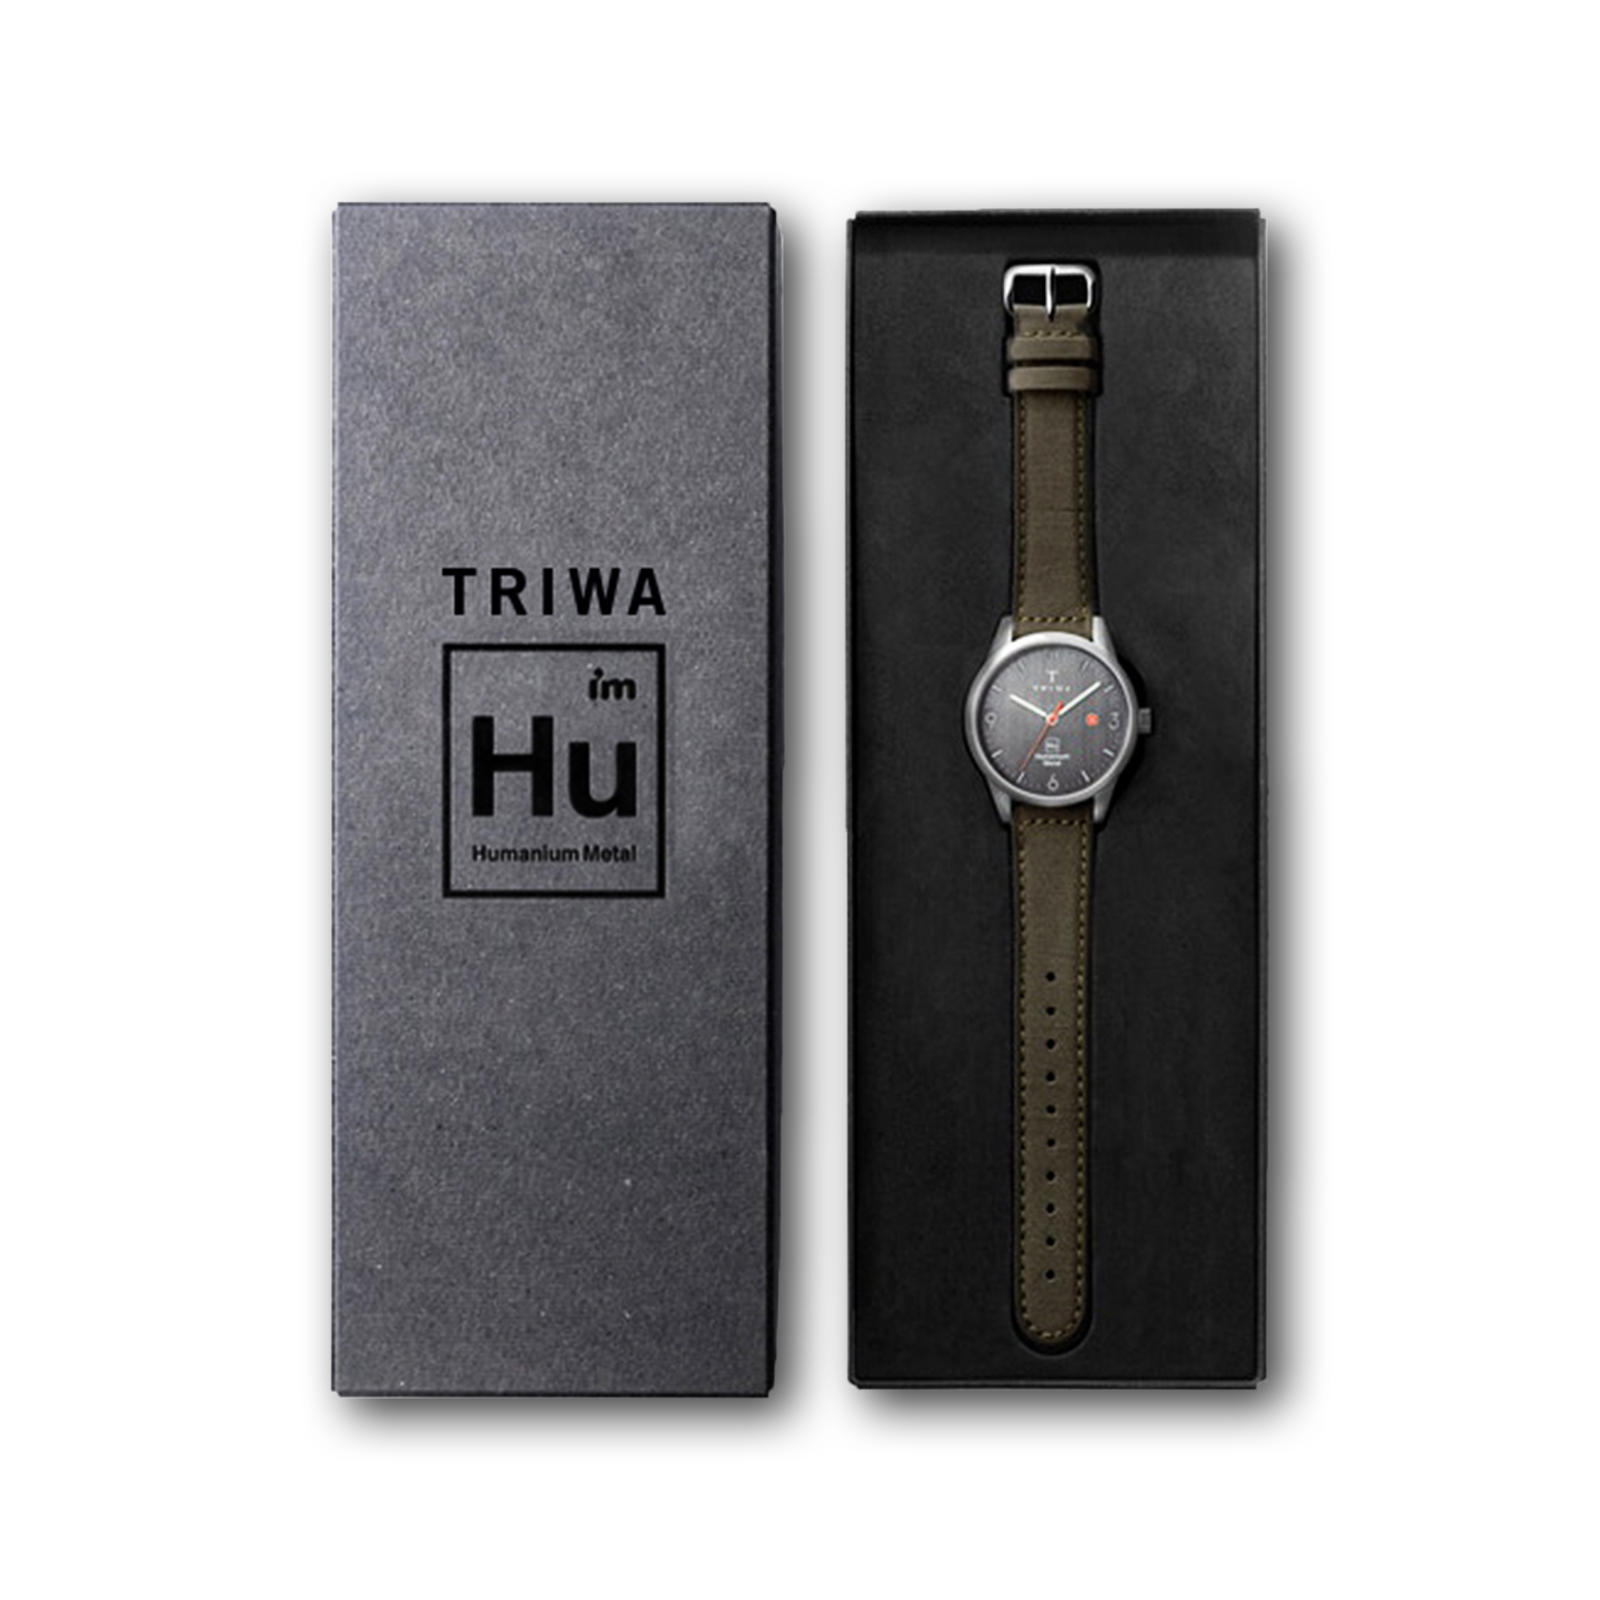 TRIWA - Humanium Metal collection